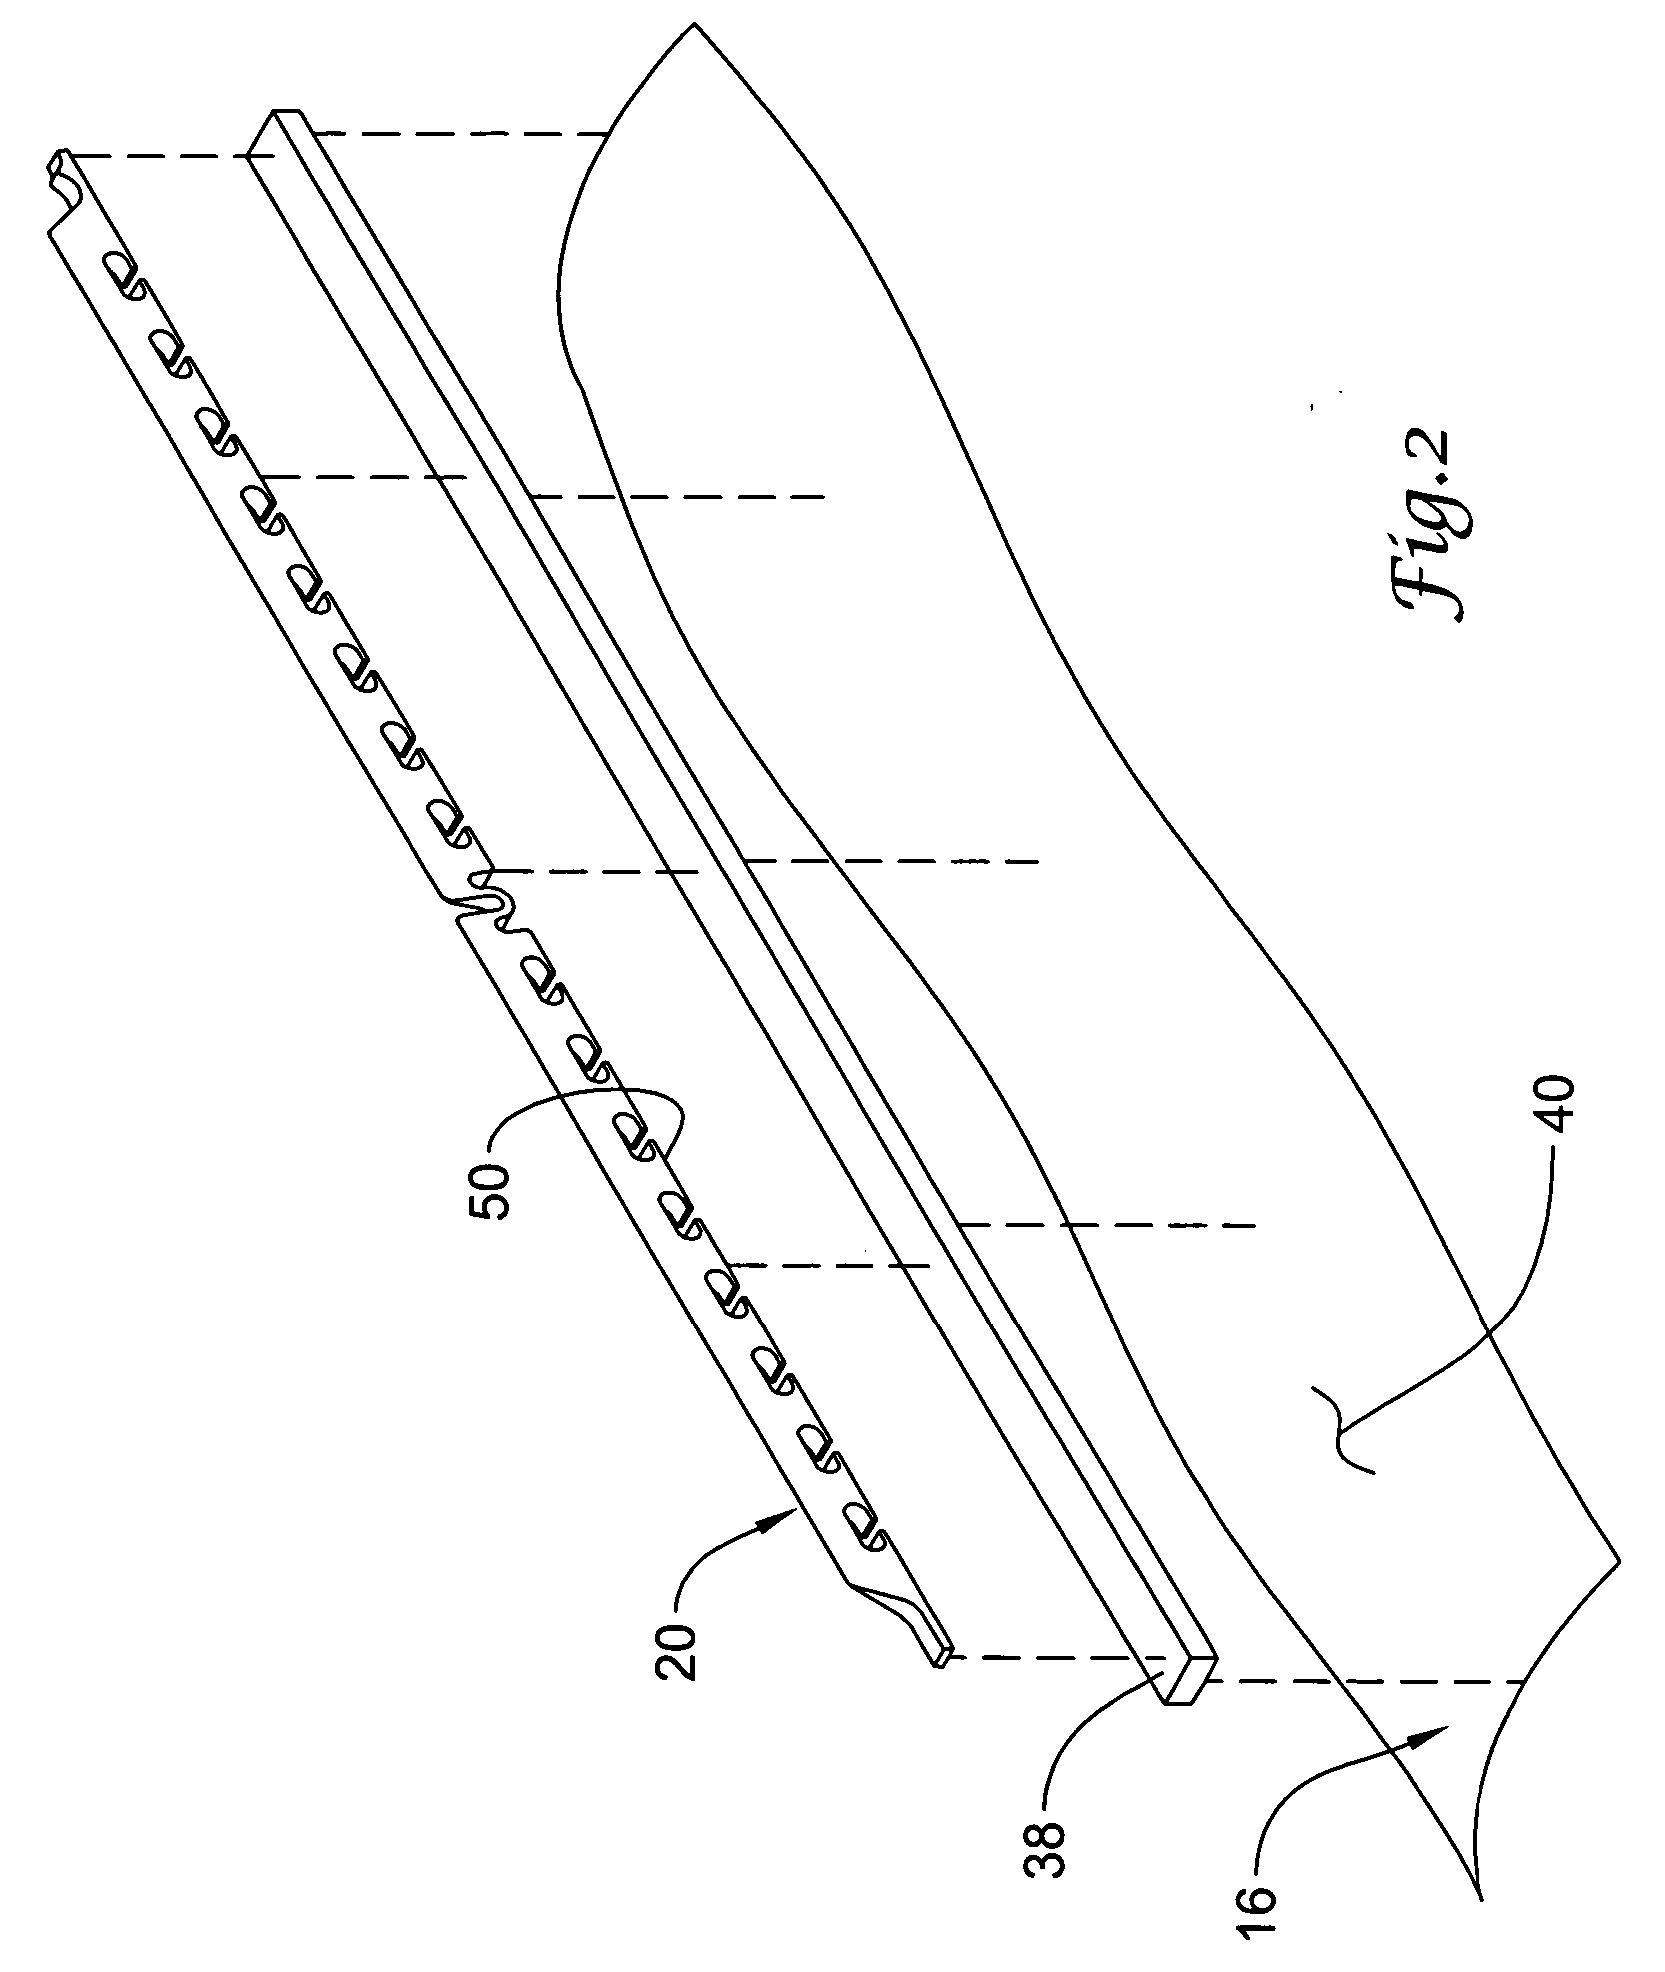 Cutting balloon catheter having a segmented blade